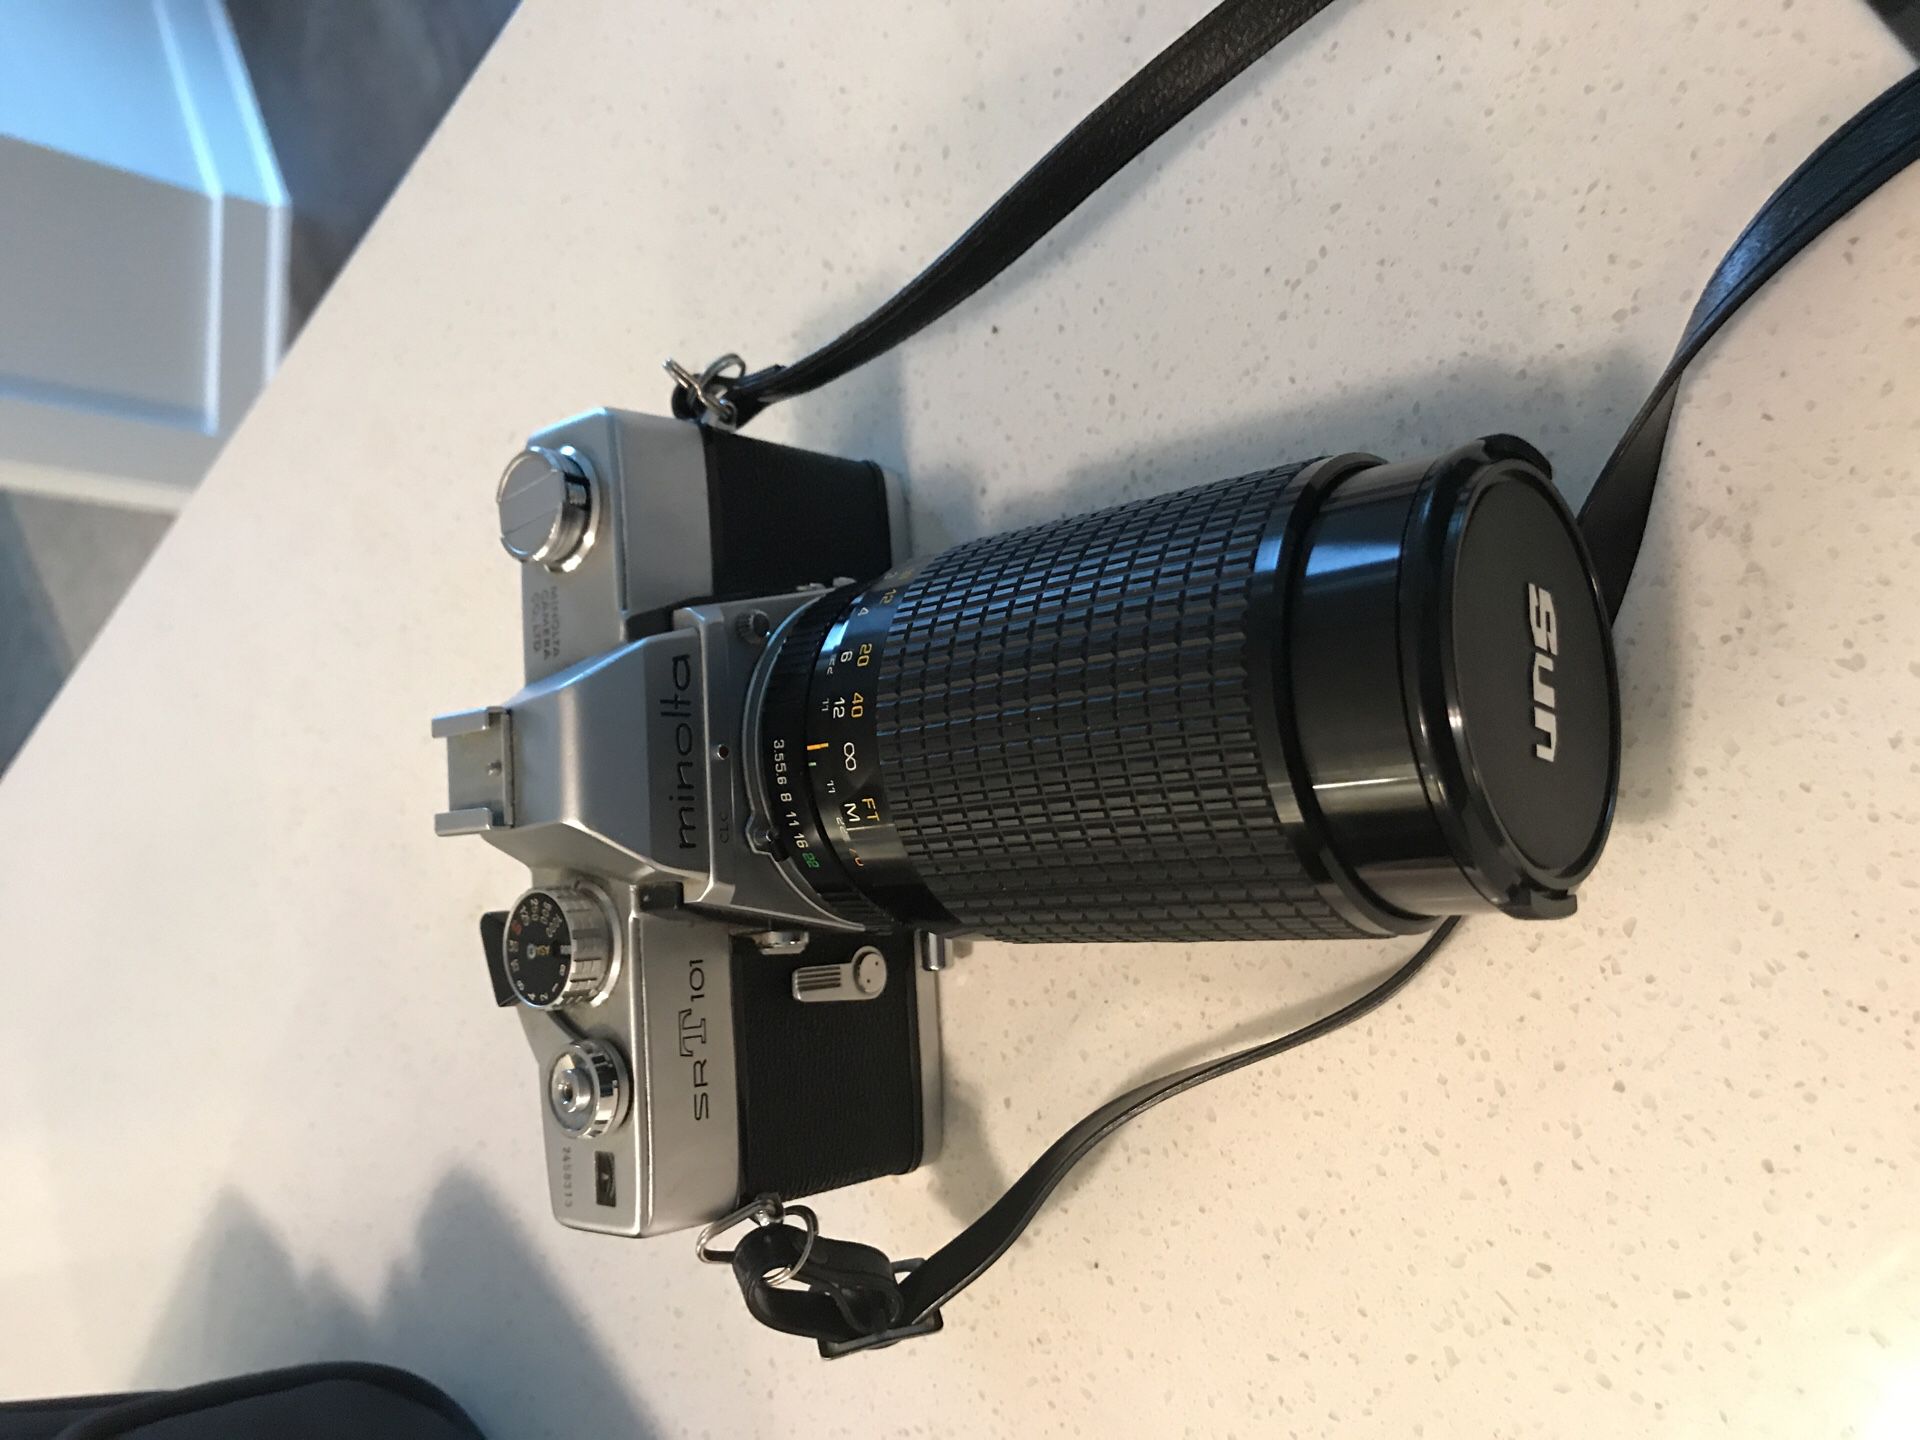 Minolta SR101 Film Camera with macro lens